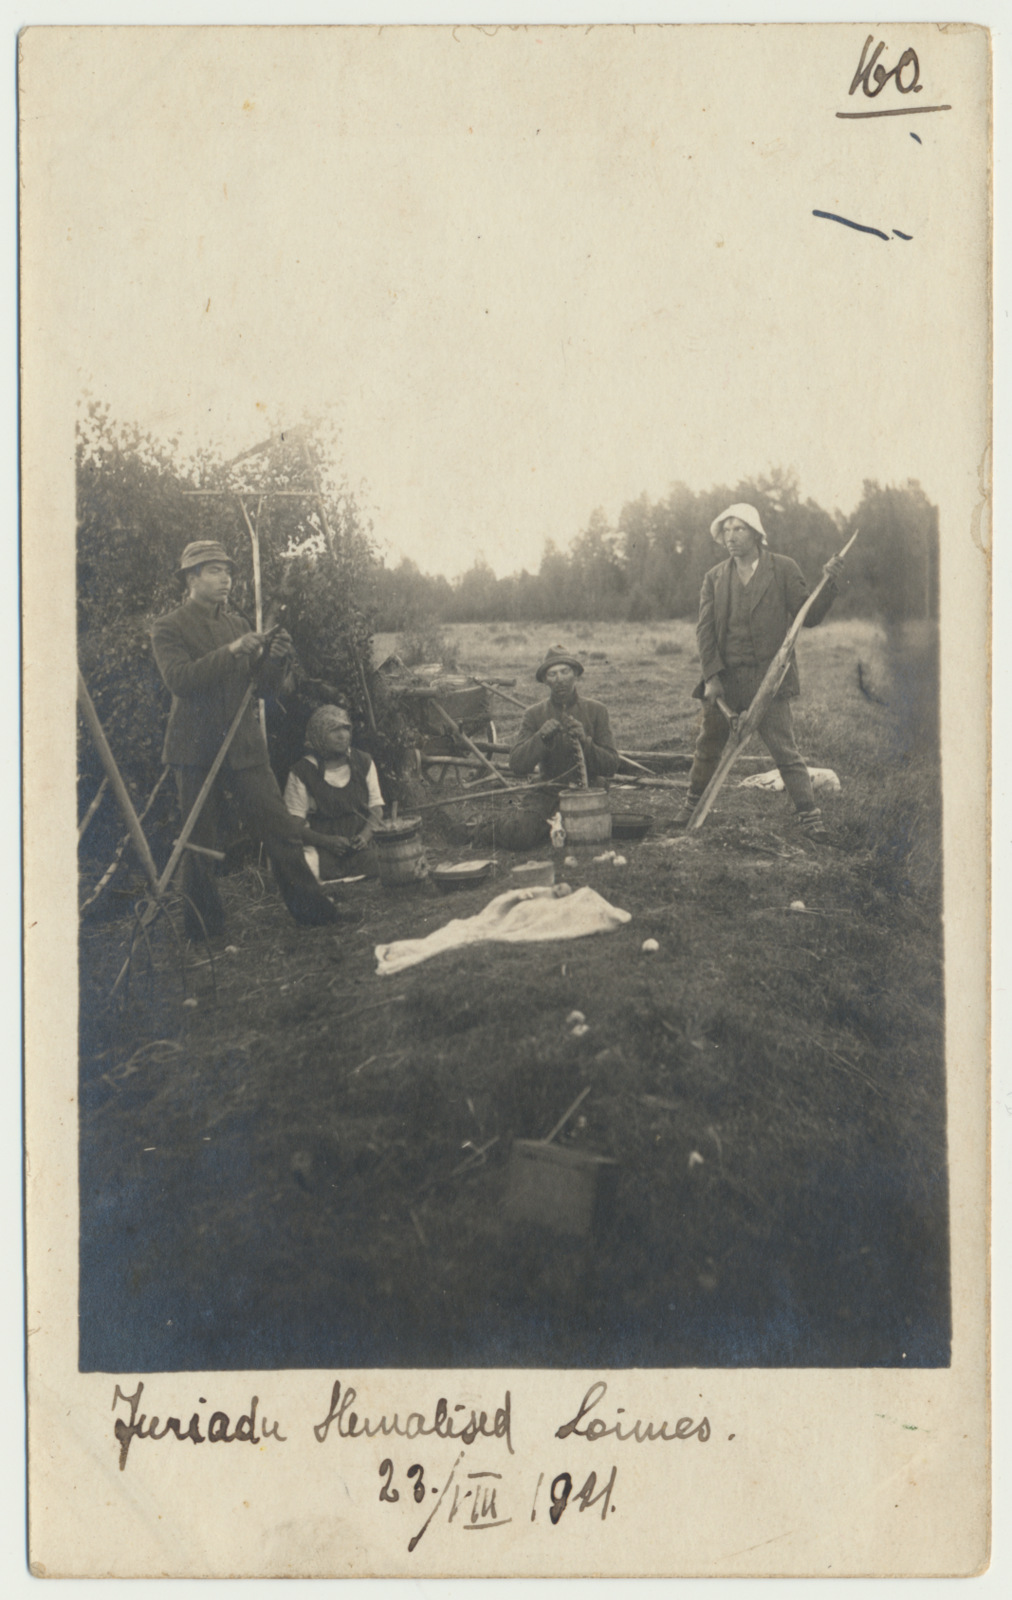 foto, Viljandi khk, Loime talu, heinategu, 1921